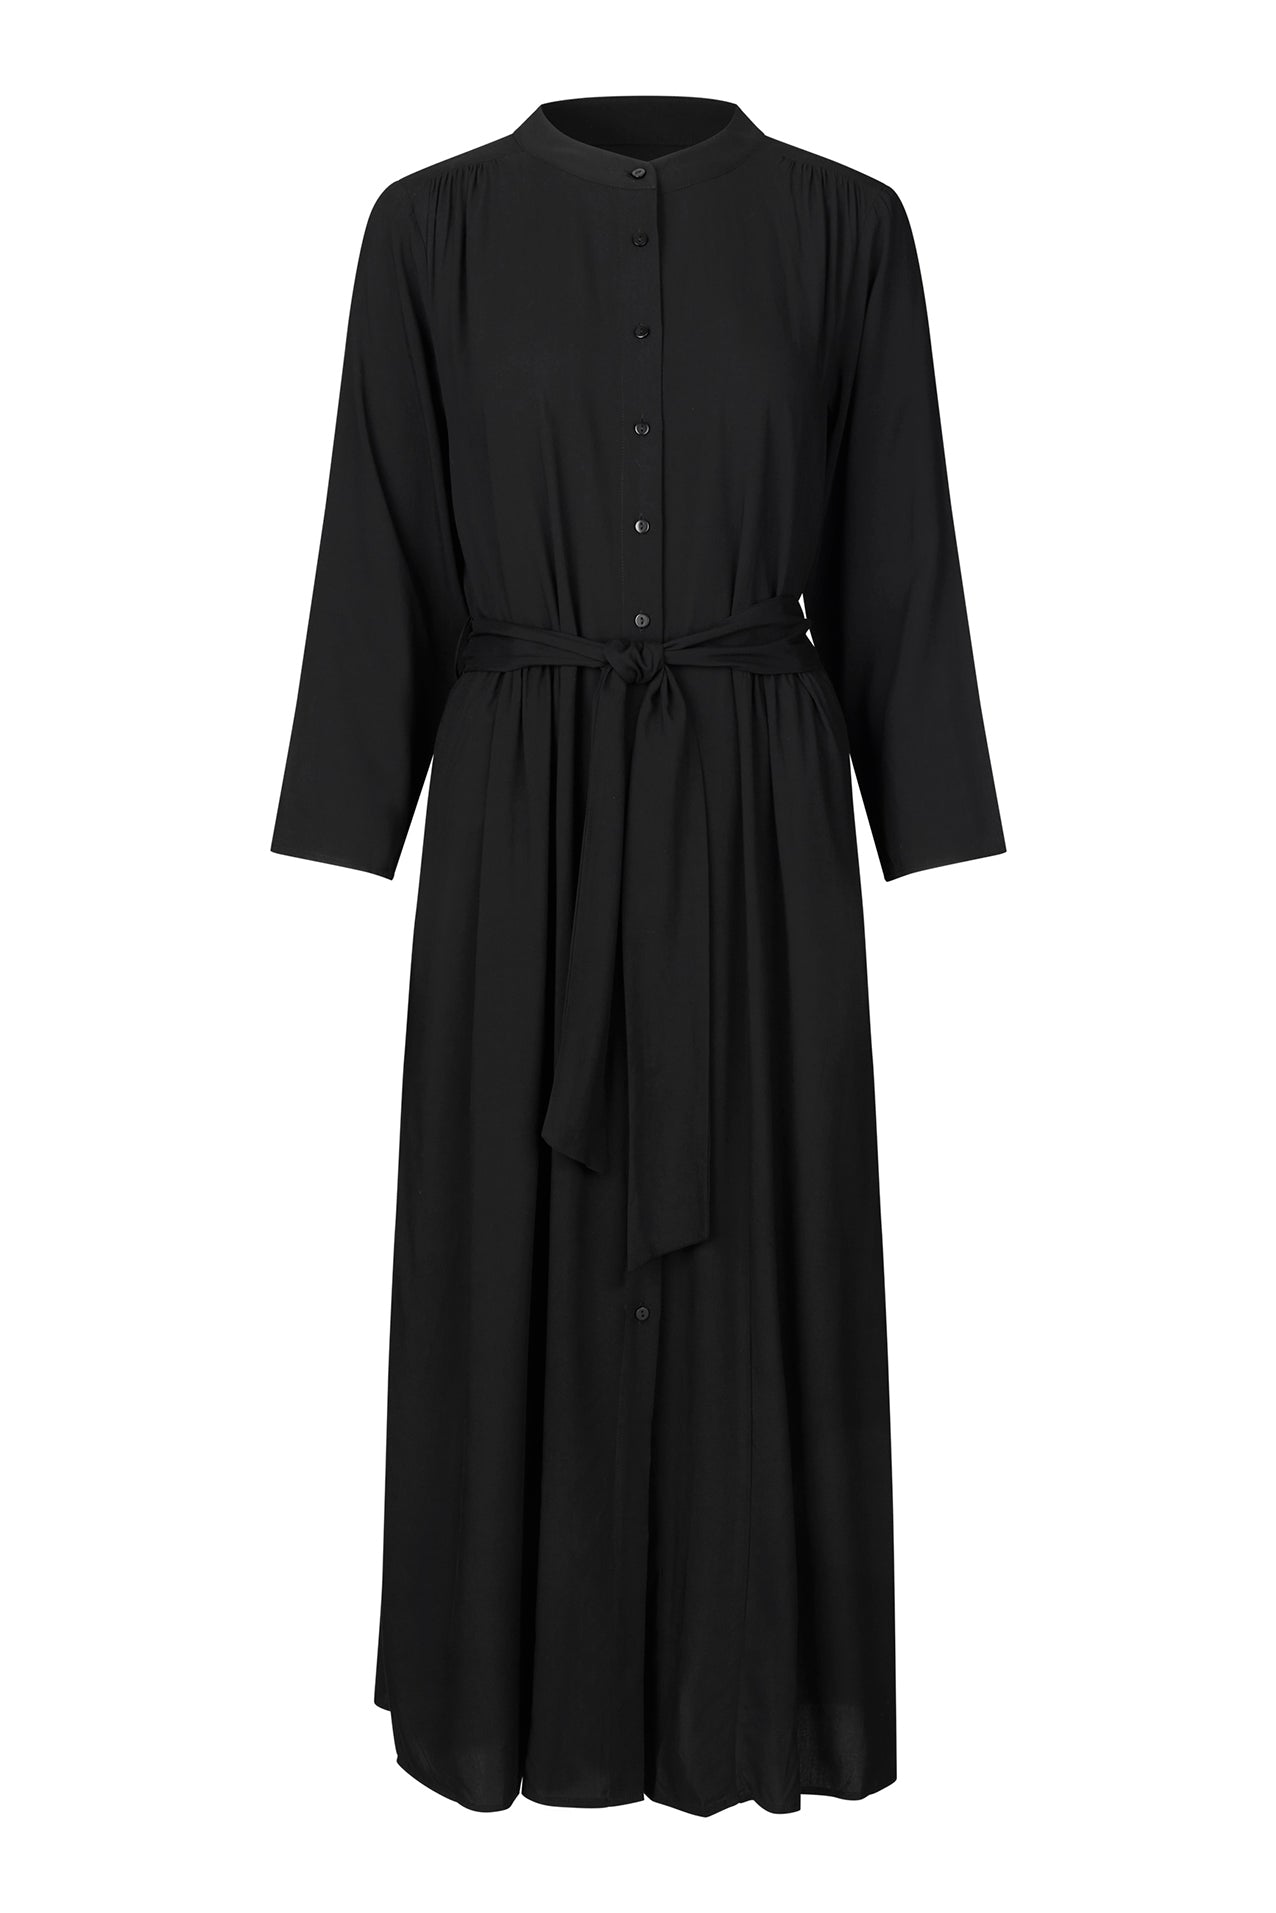 Lollys Laundry HarperLL Maxi Dress 3/4 Dress 99 Black